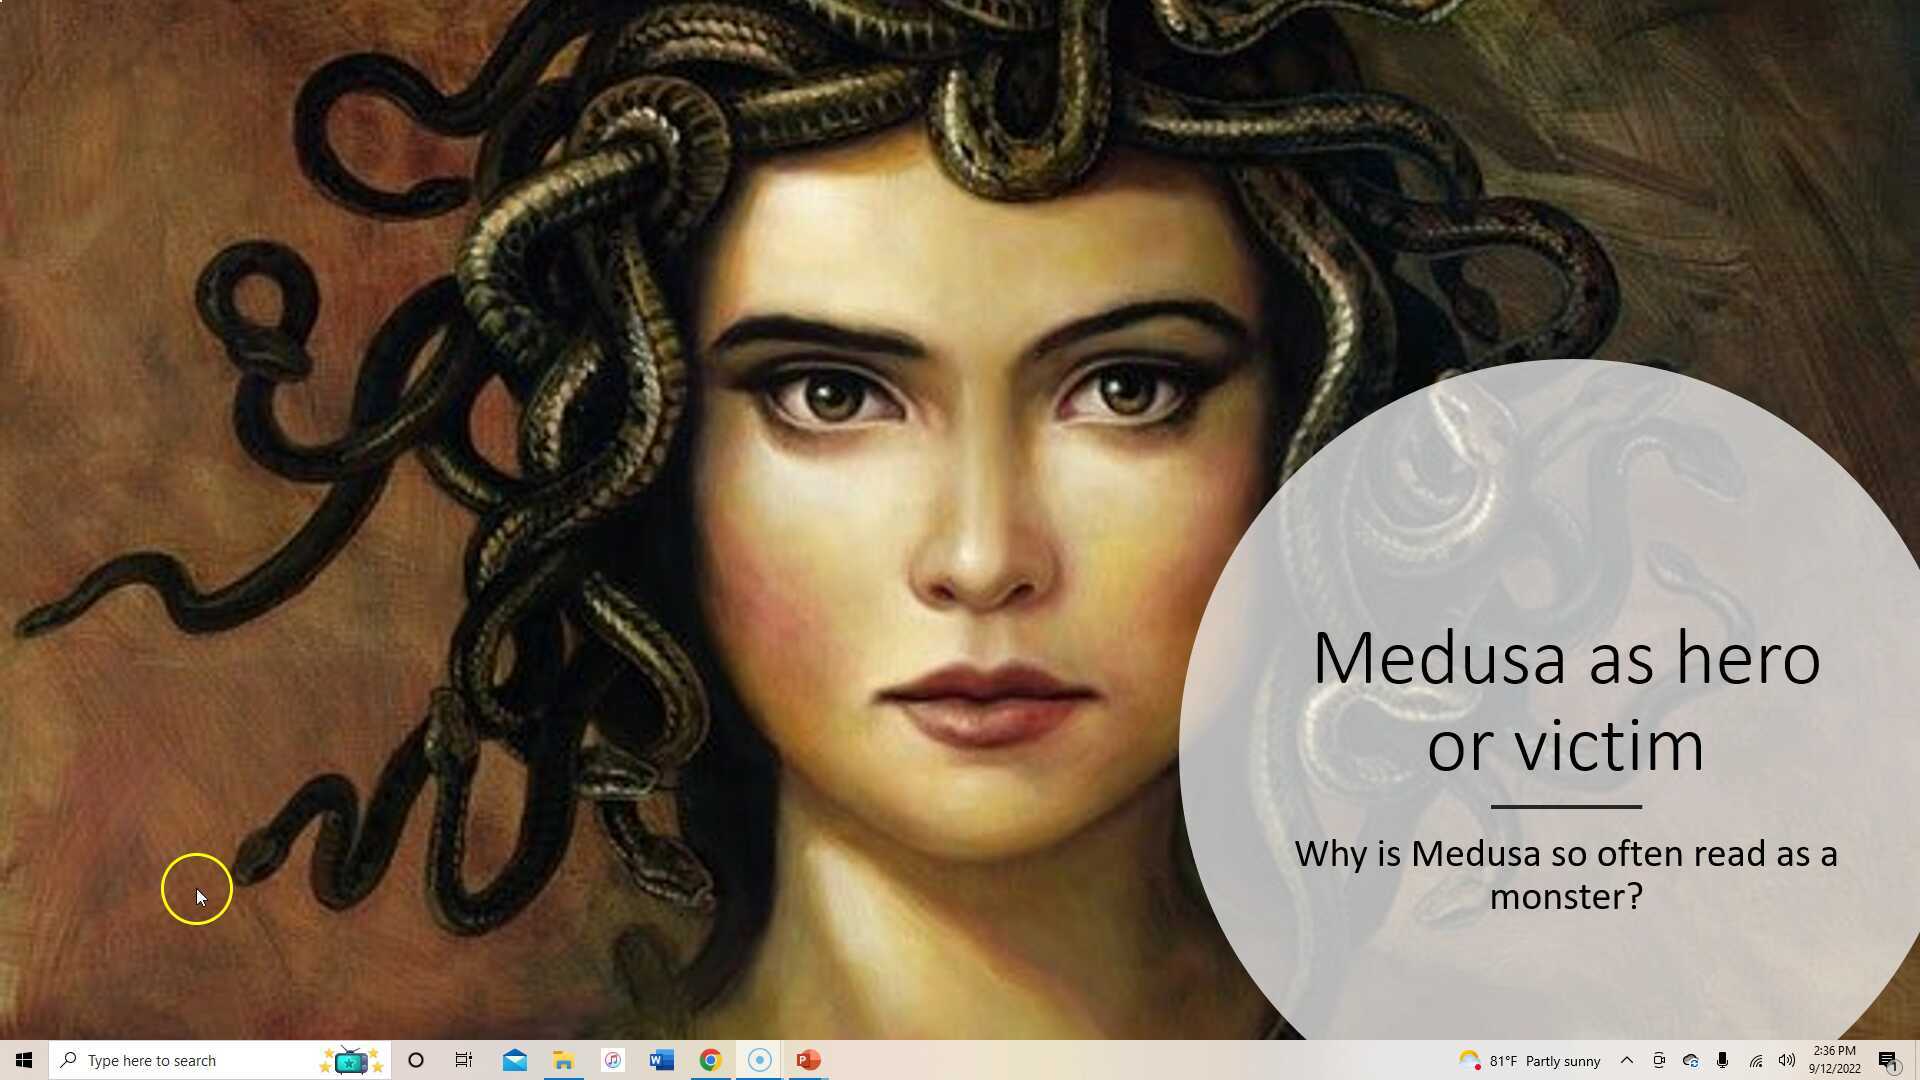 Medusa as victim or hero